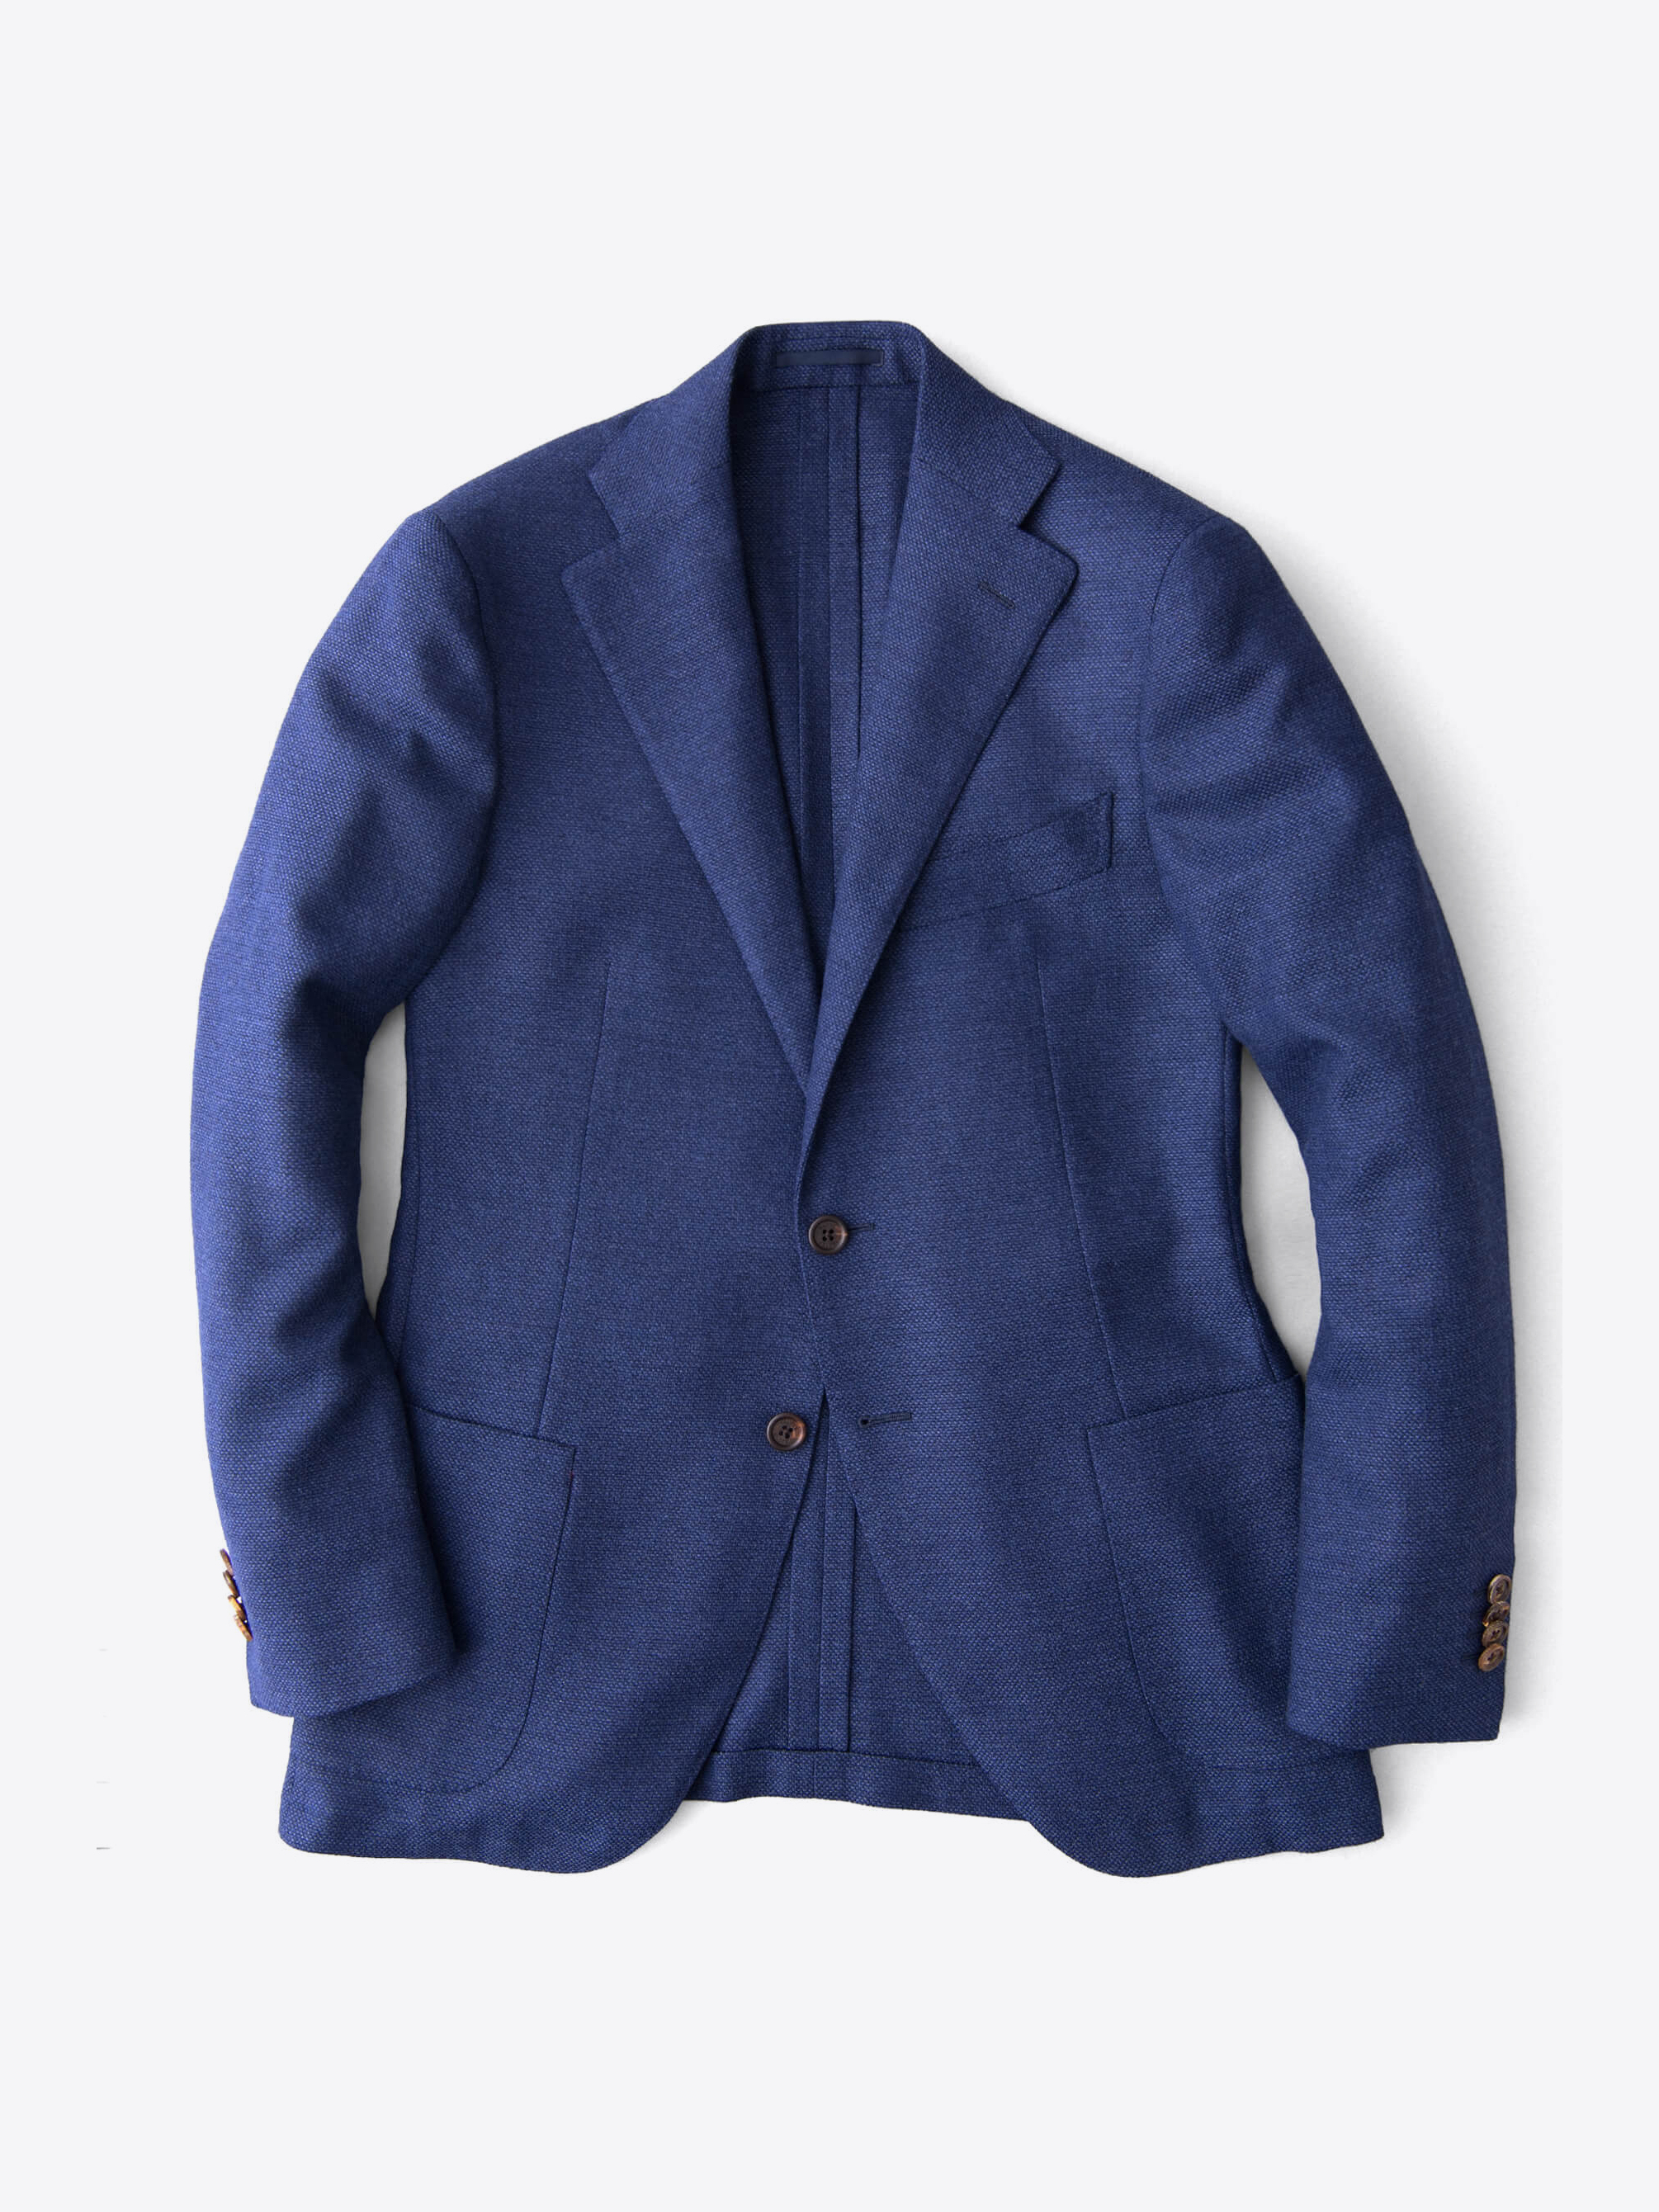 Zoom Image of Hudson Ocean Blue Wool Flannel Hopsack Jacket